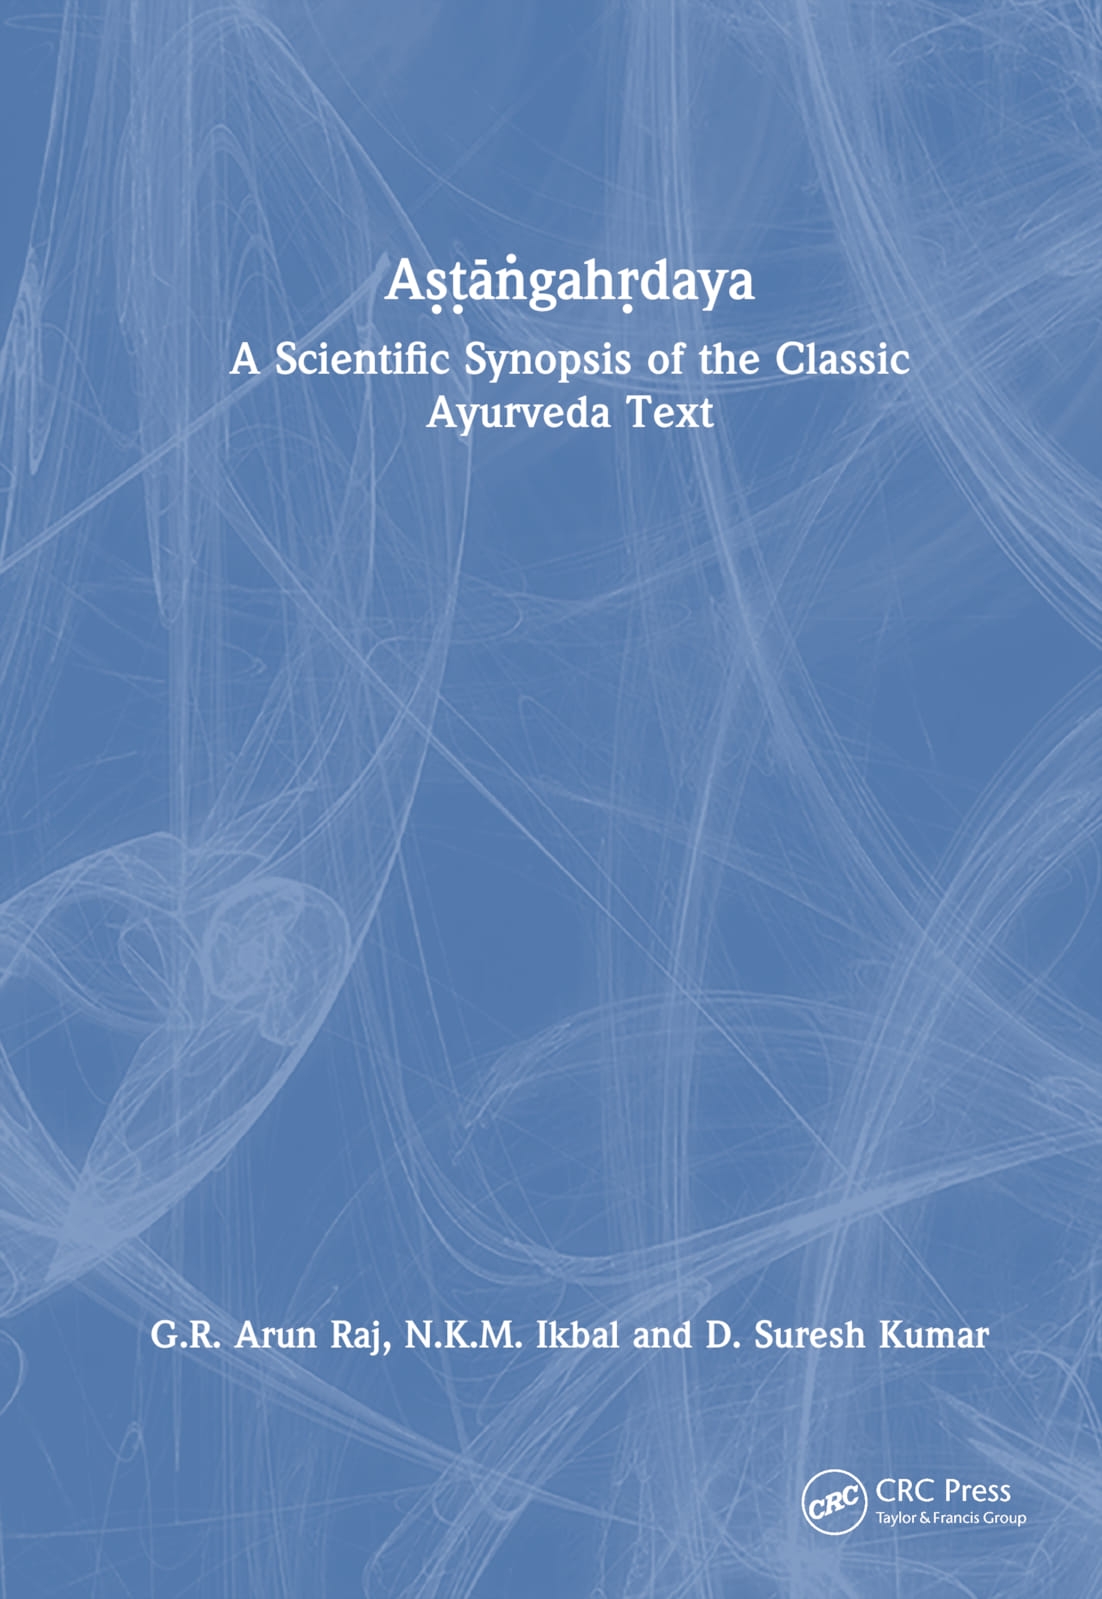 Aṣṭāṅgahṛdaya: A Scientific Synopsis of the Classic Ayurveda Text